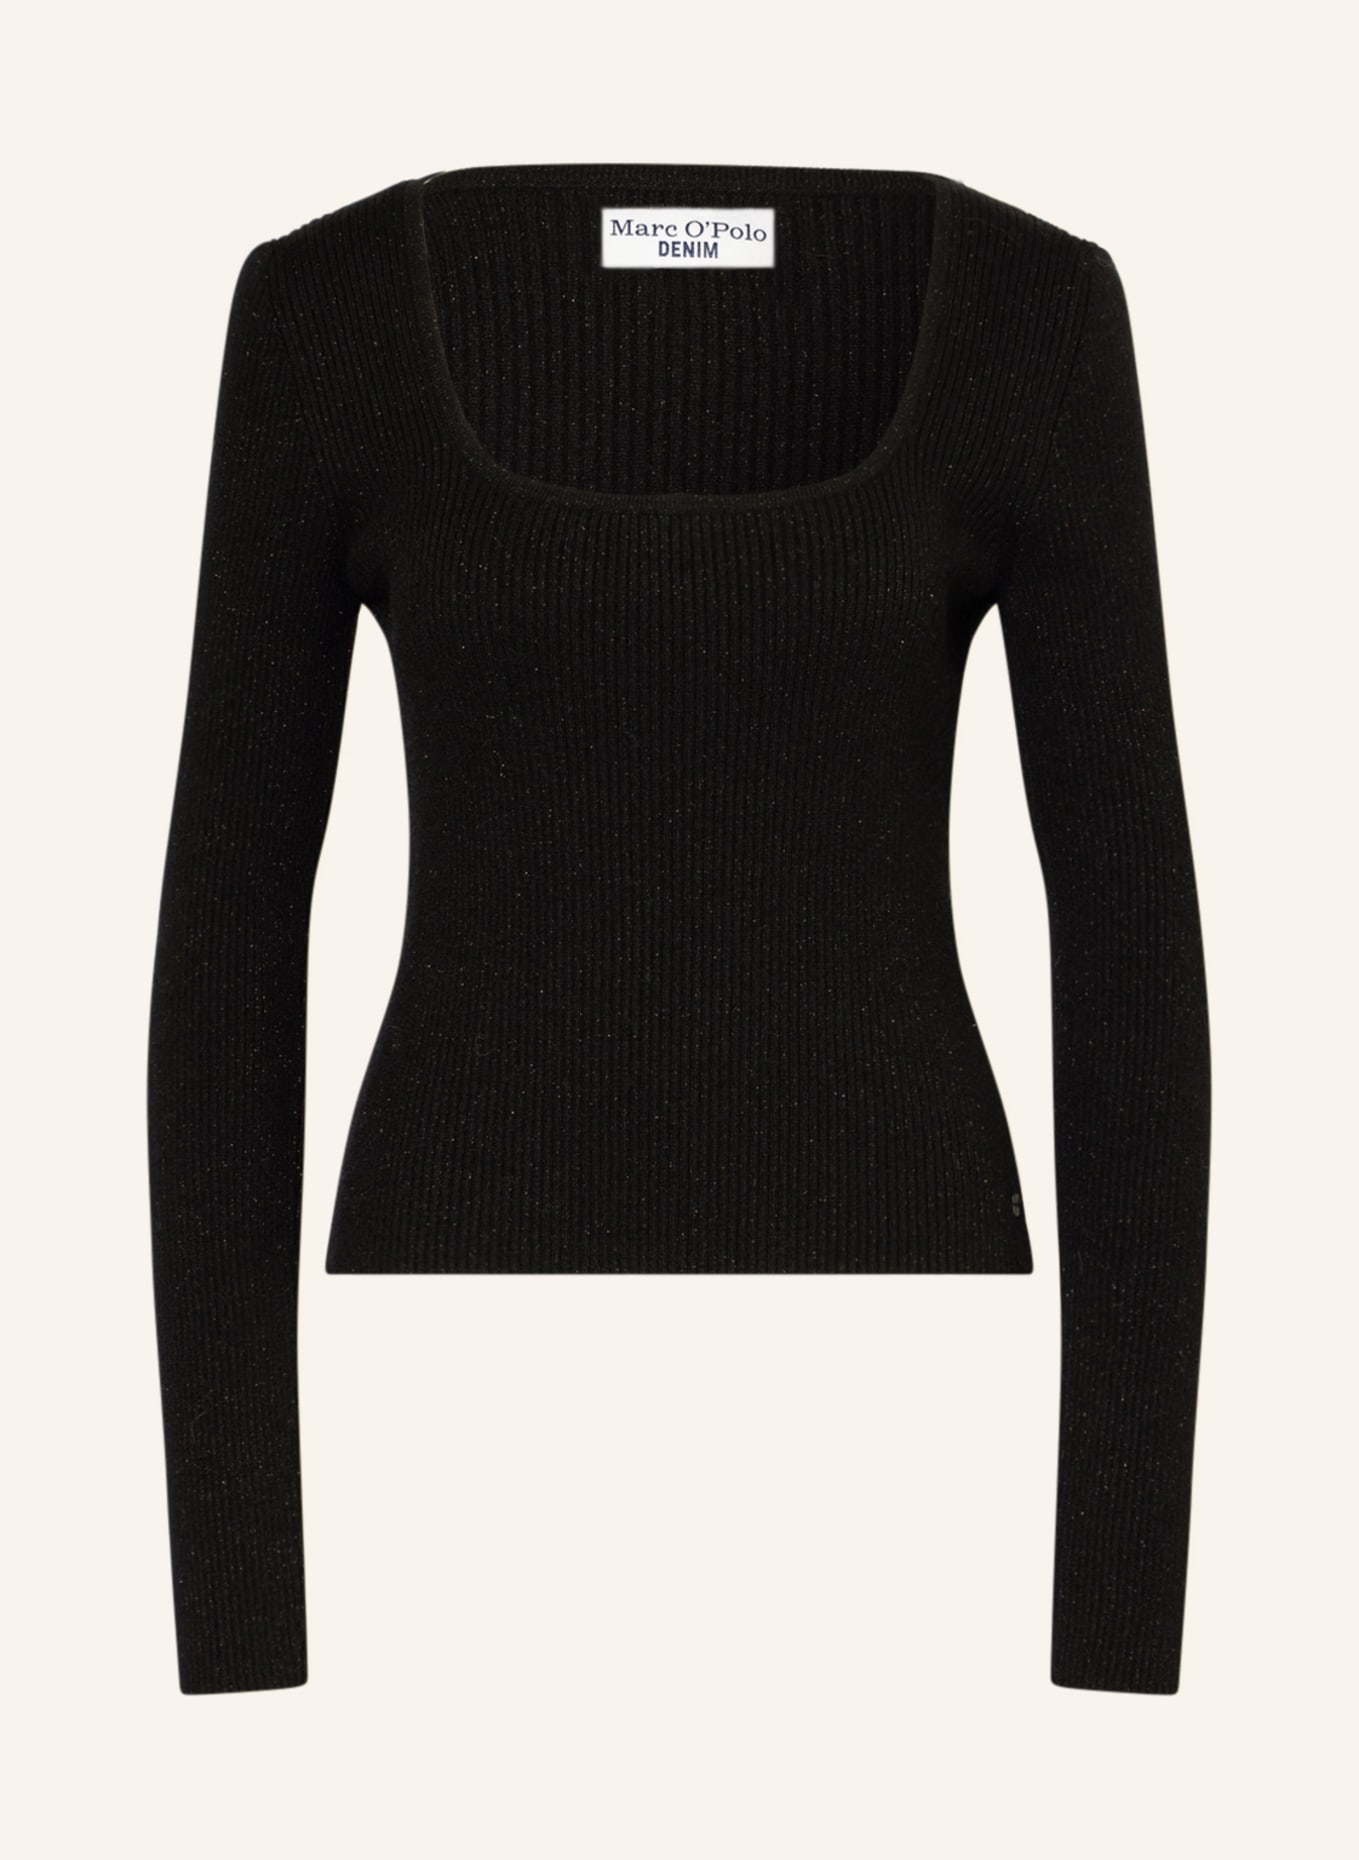 Marc O'Polo DENIM Sweater with glitter thread, Color: BLACK (Image 1)